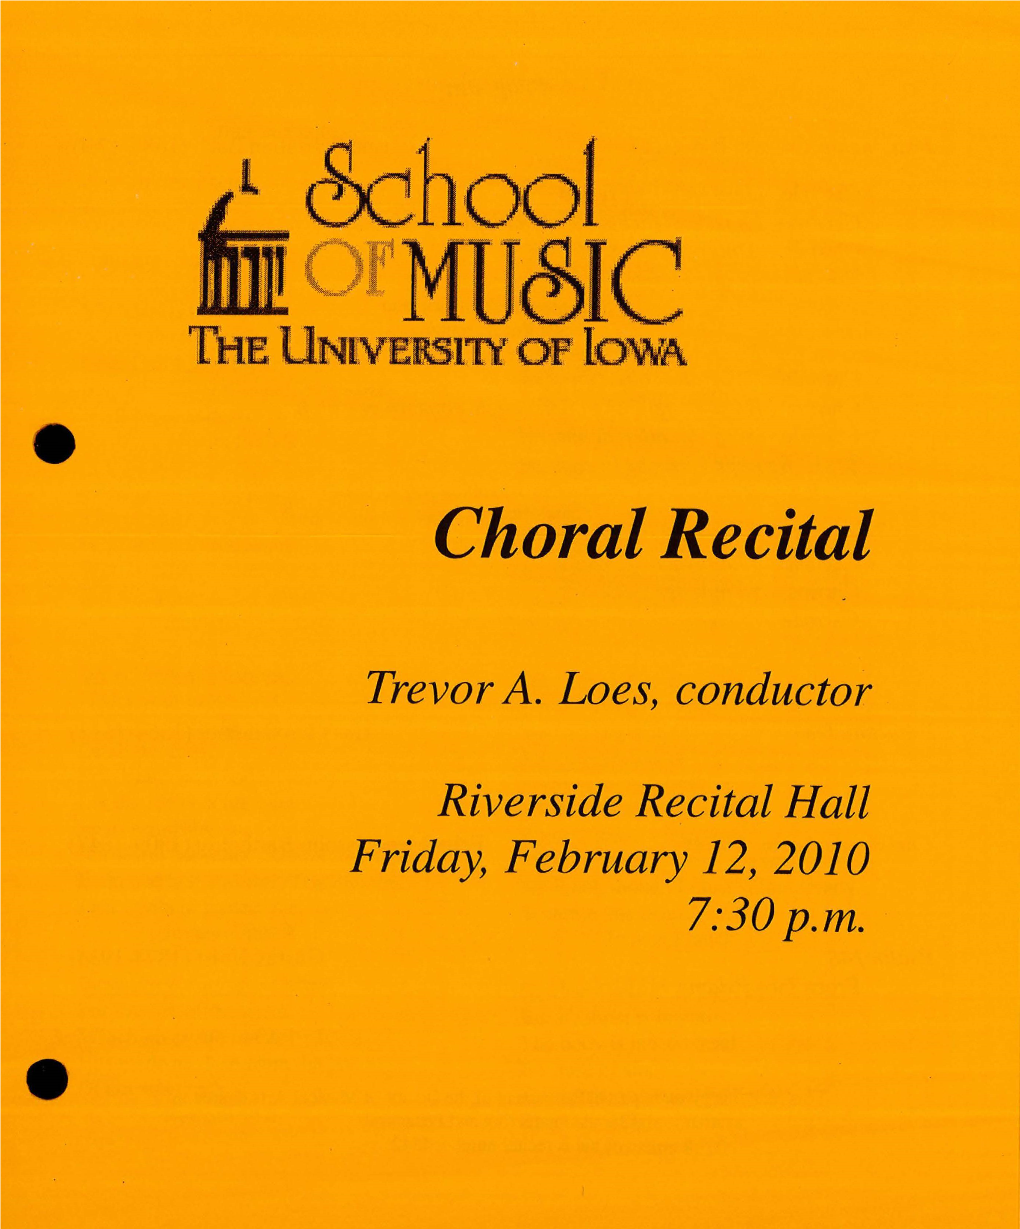 Choral Recital